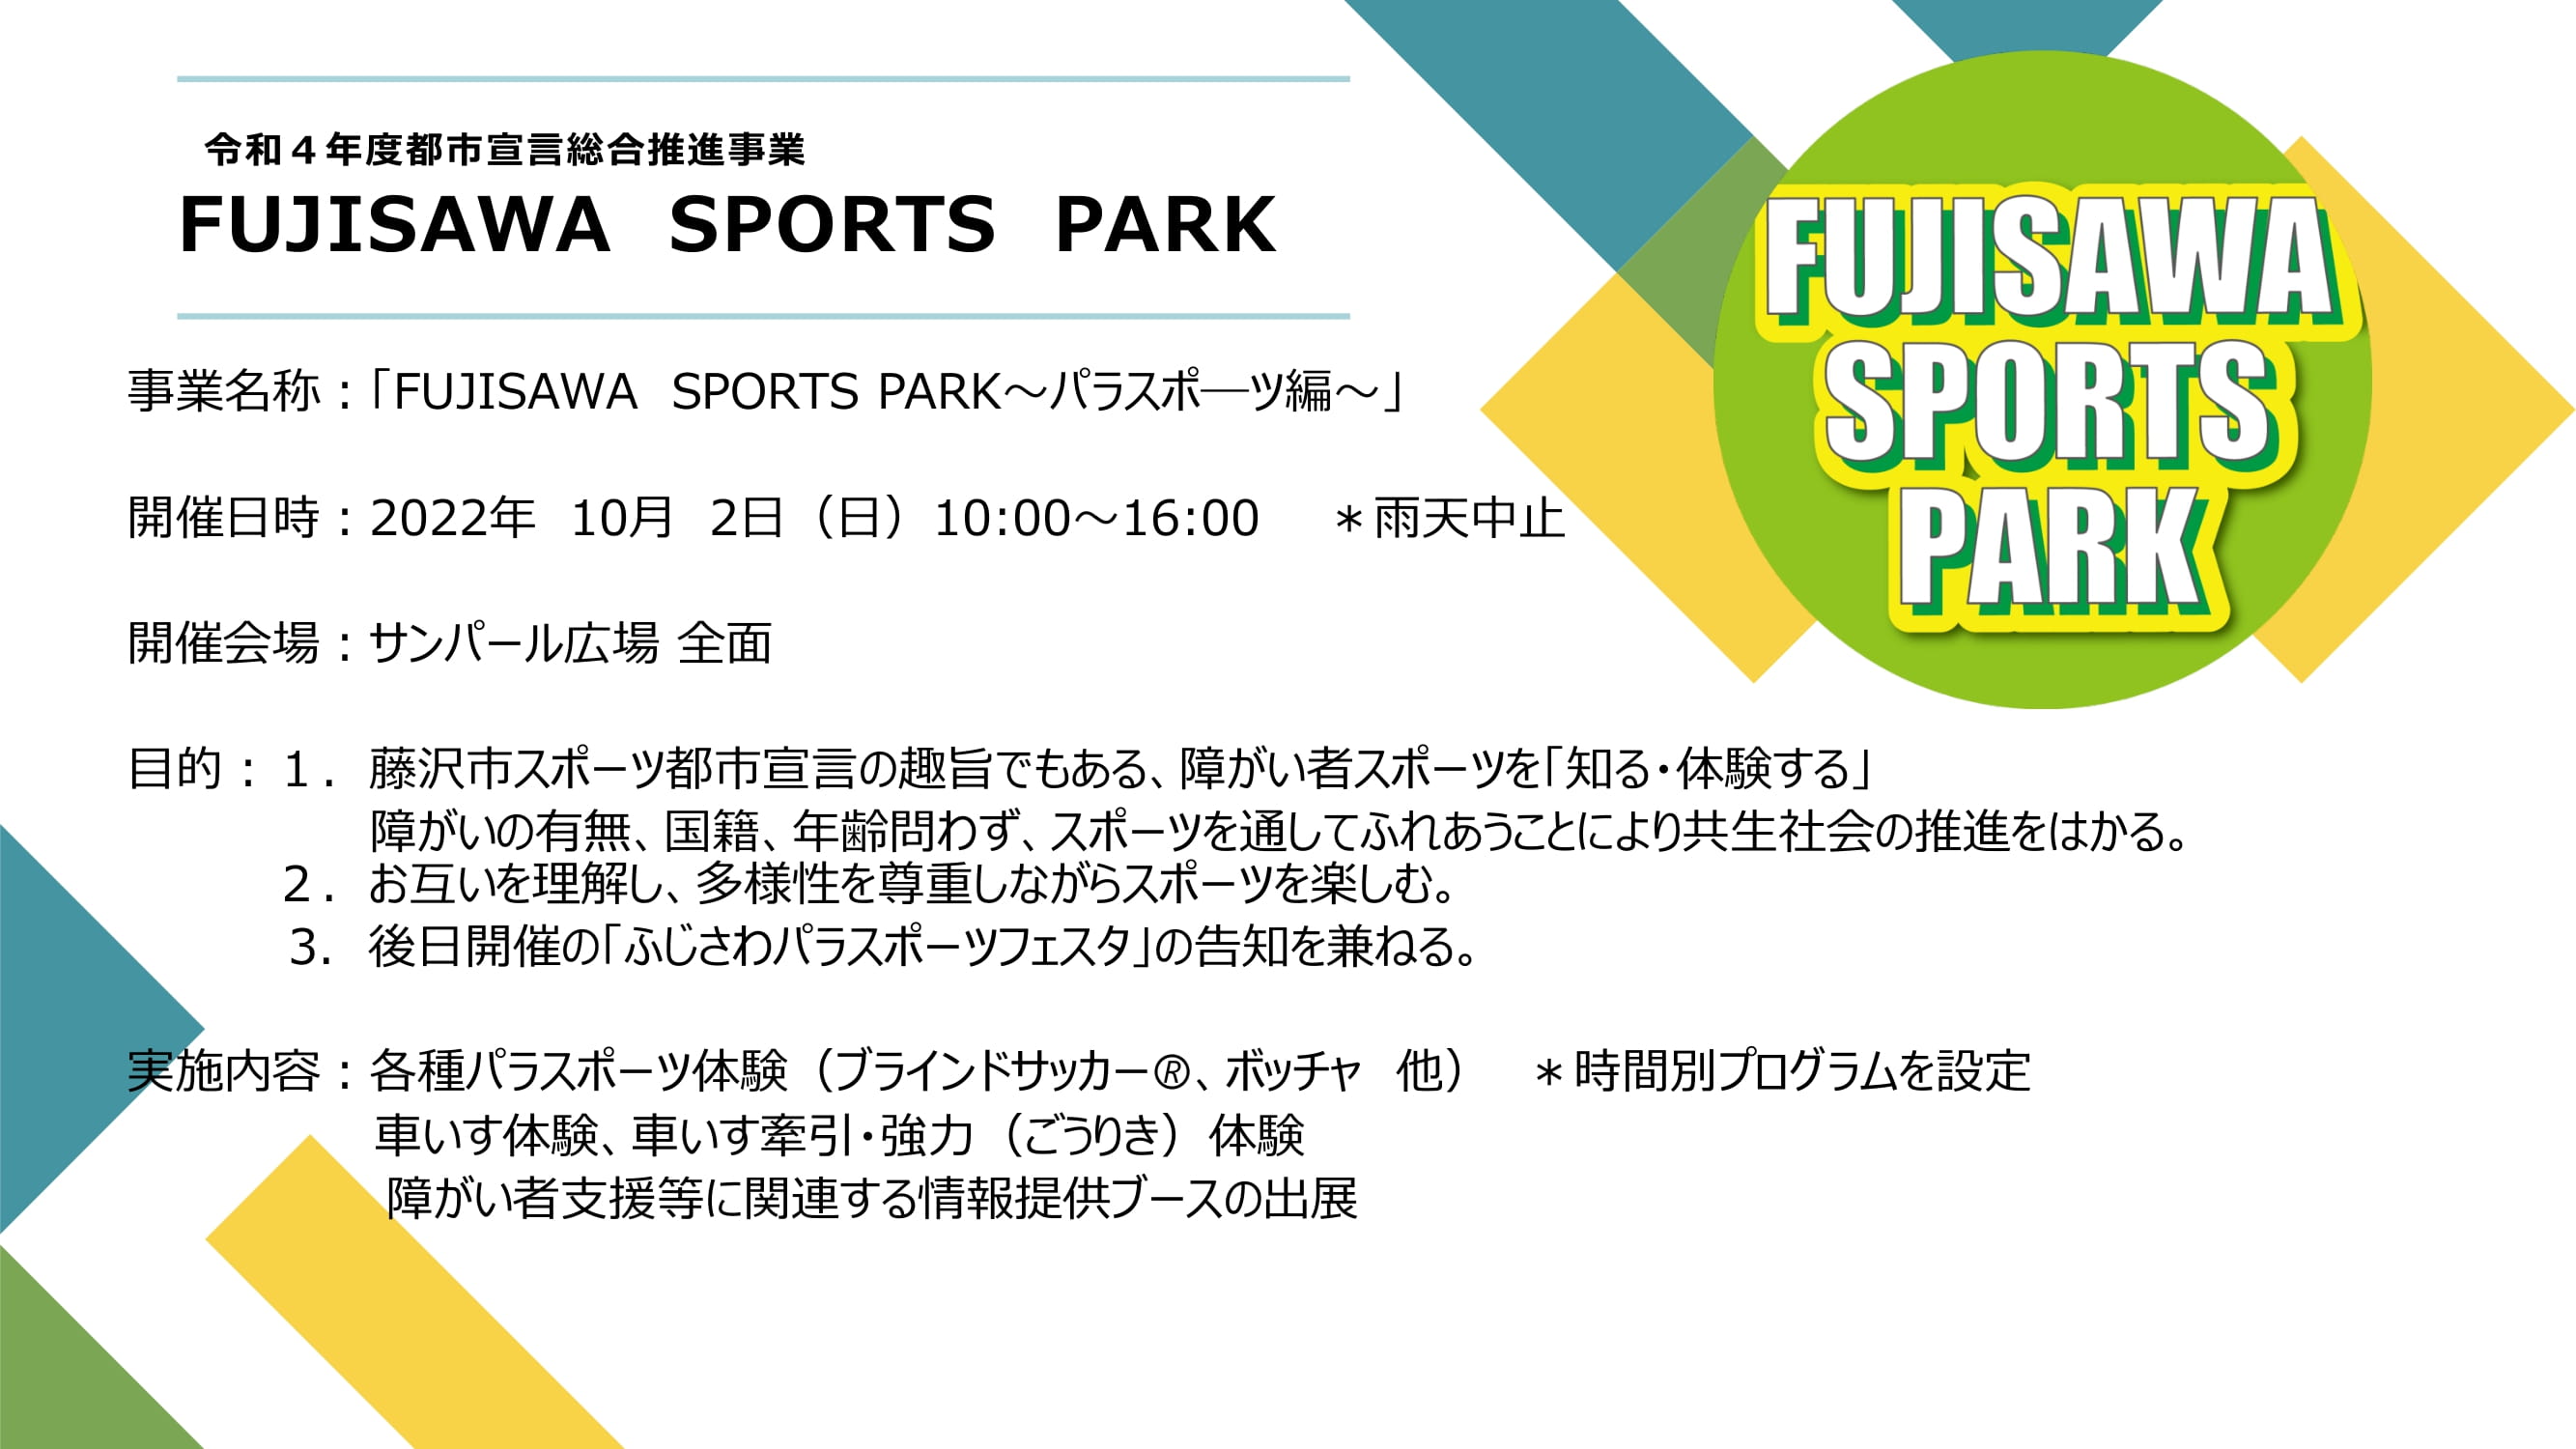 FUJISAWA SPORTS PARK・スタッフボランティアに参加してみませんか！